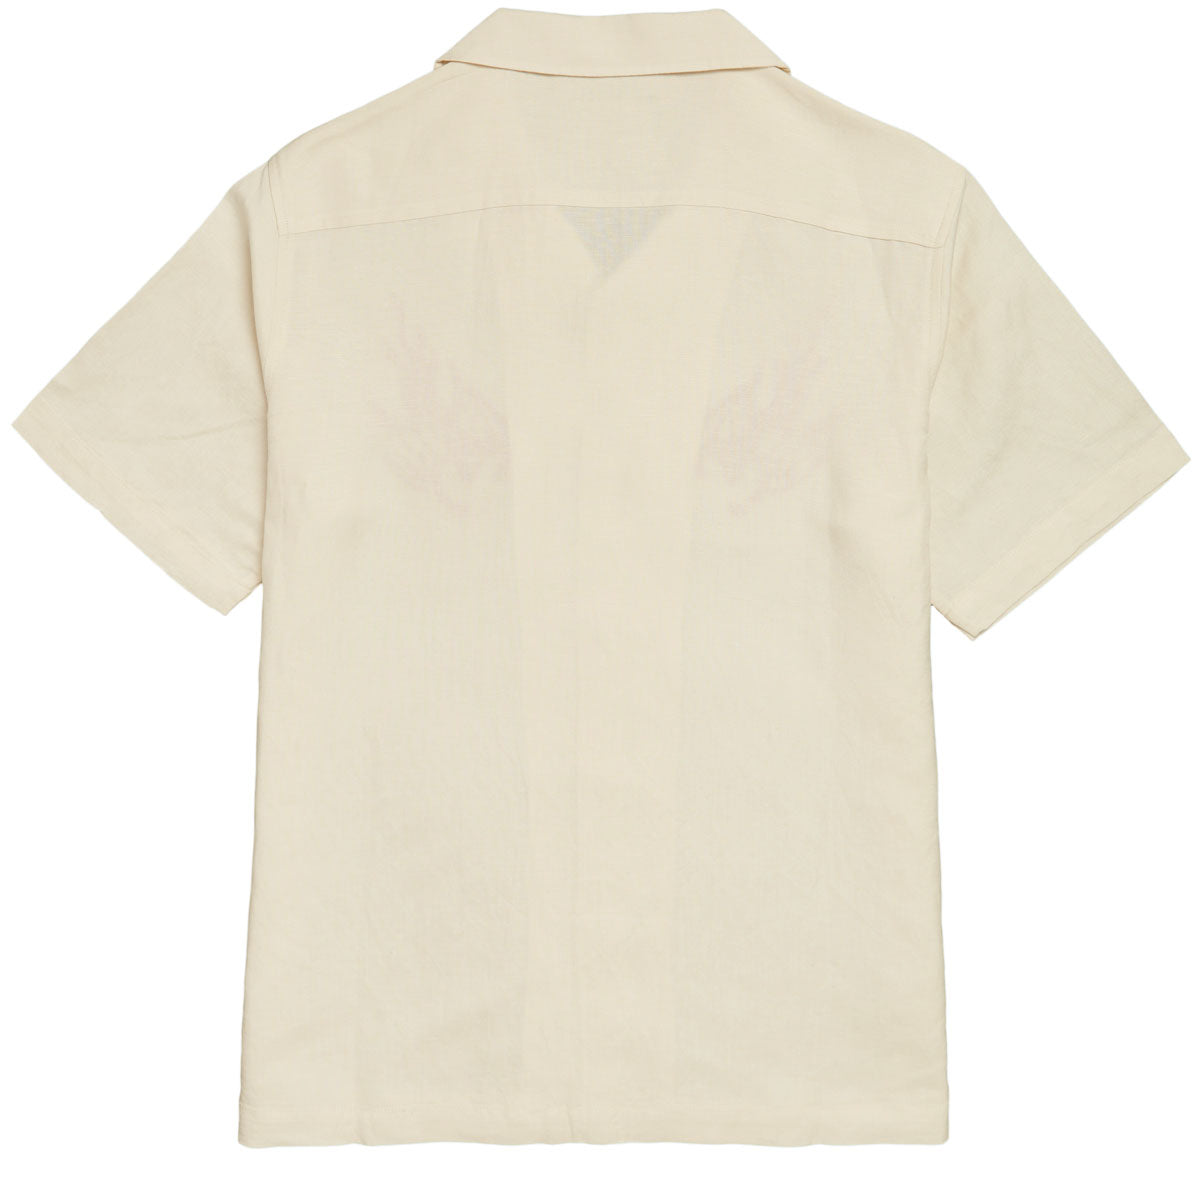 Welcome Hellion Embd Linen Shirt - Bone image 3